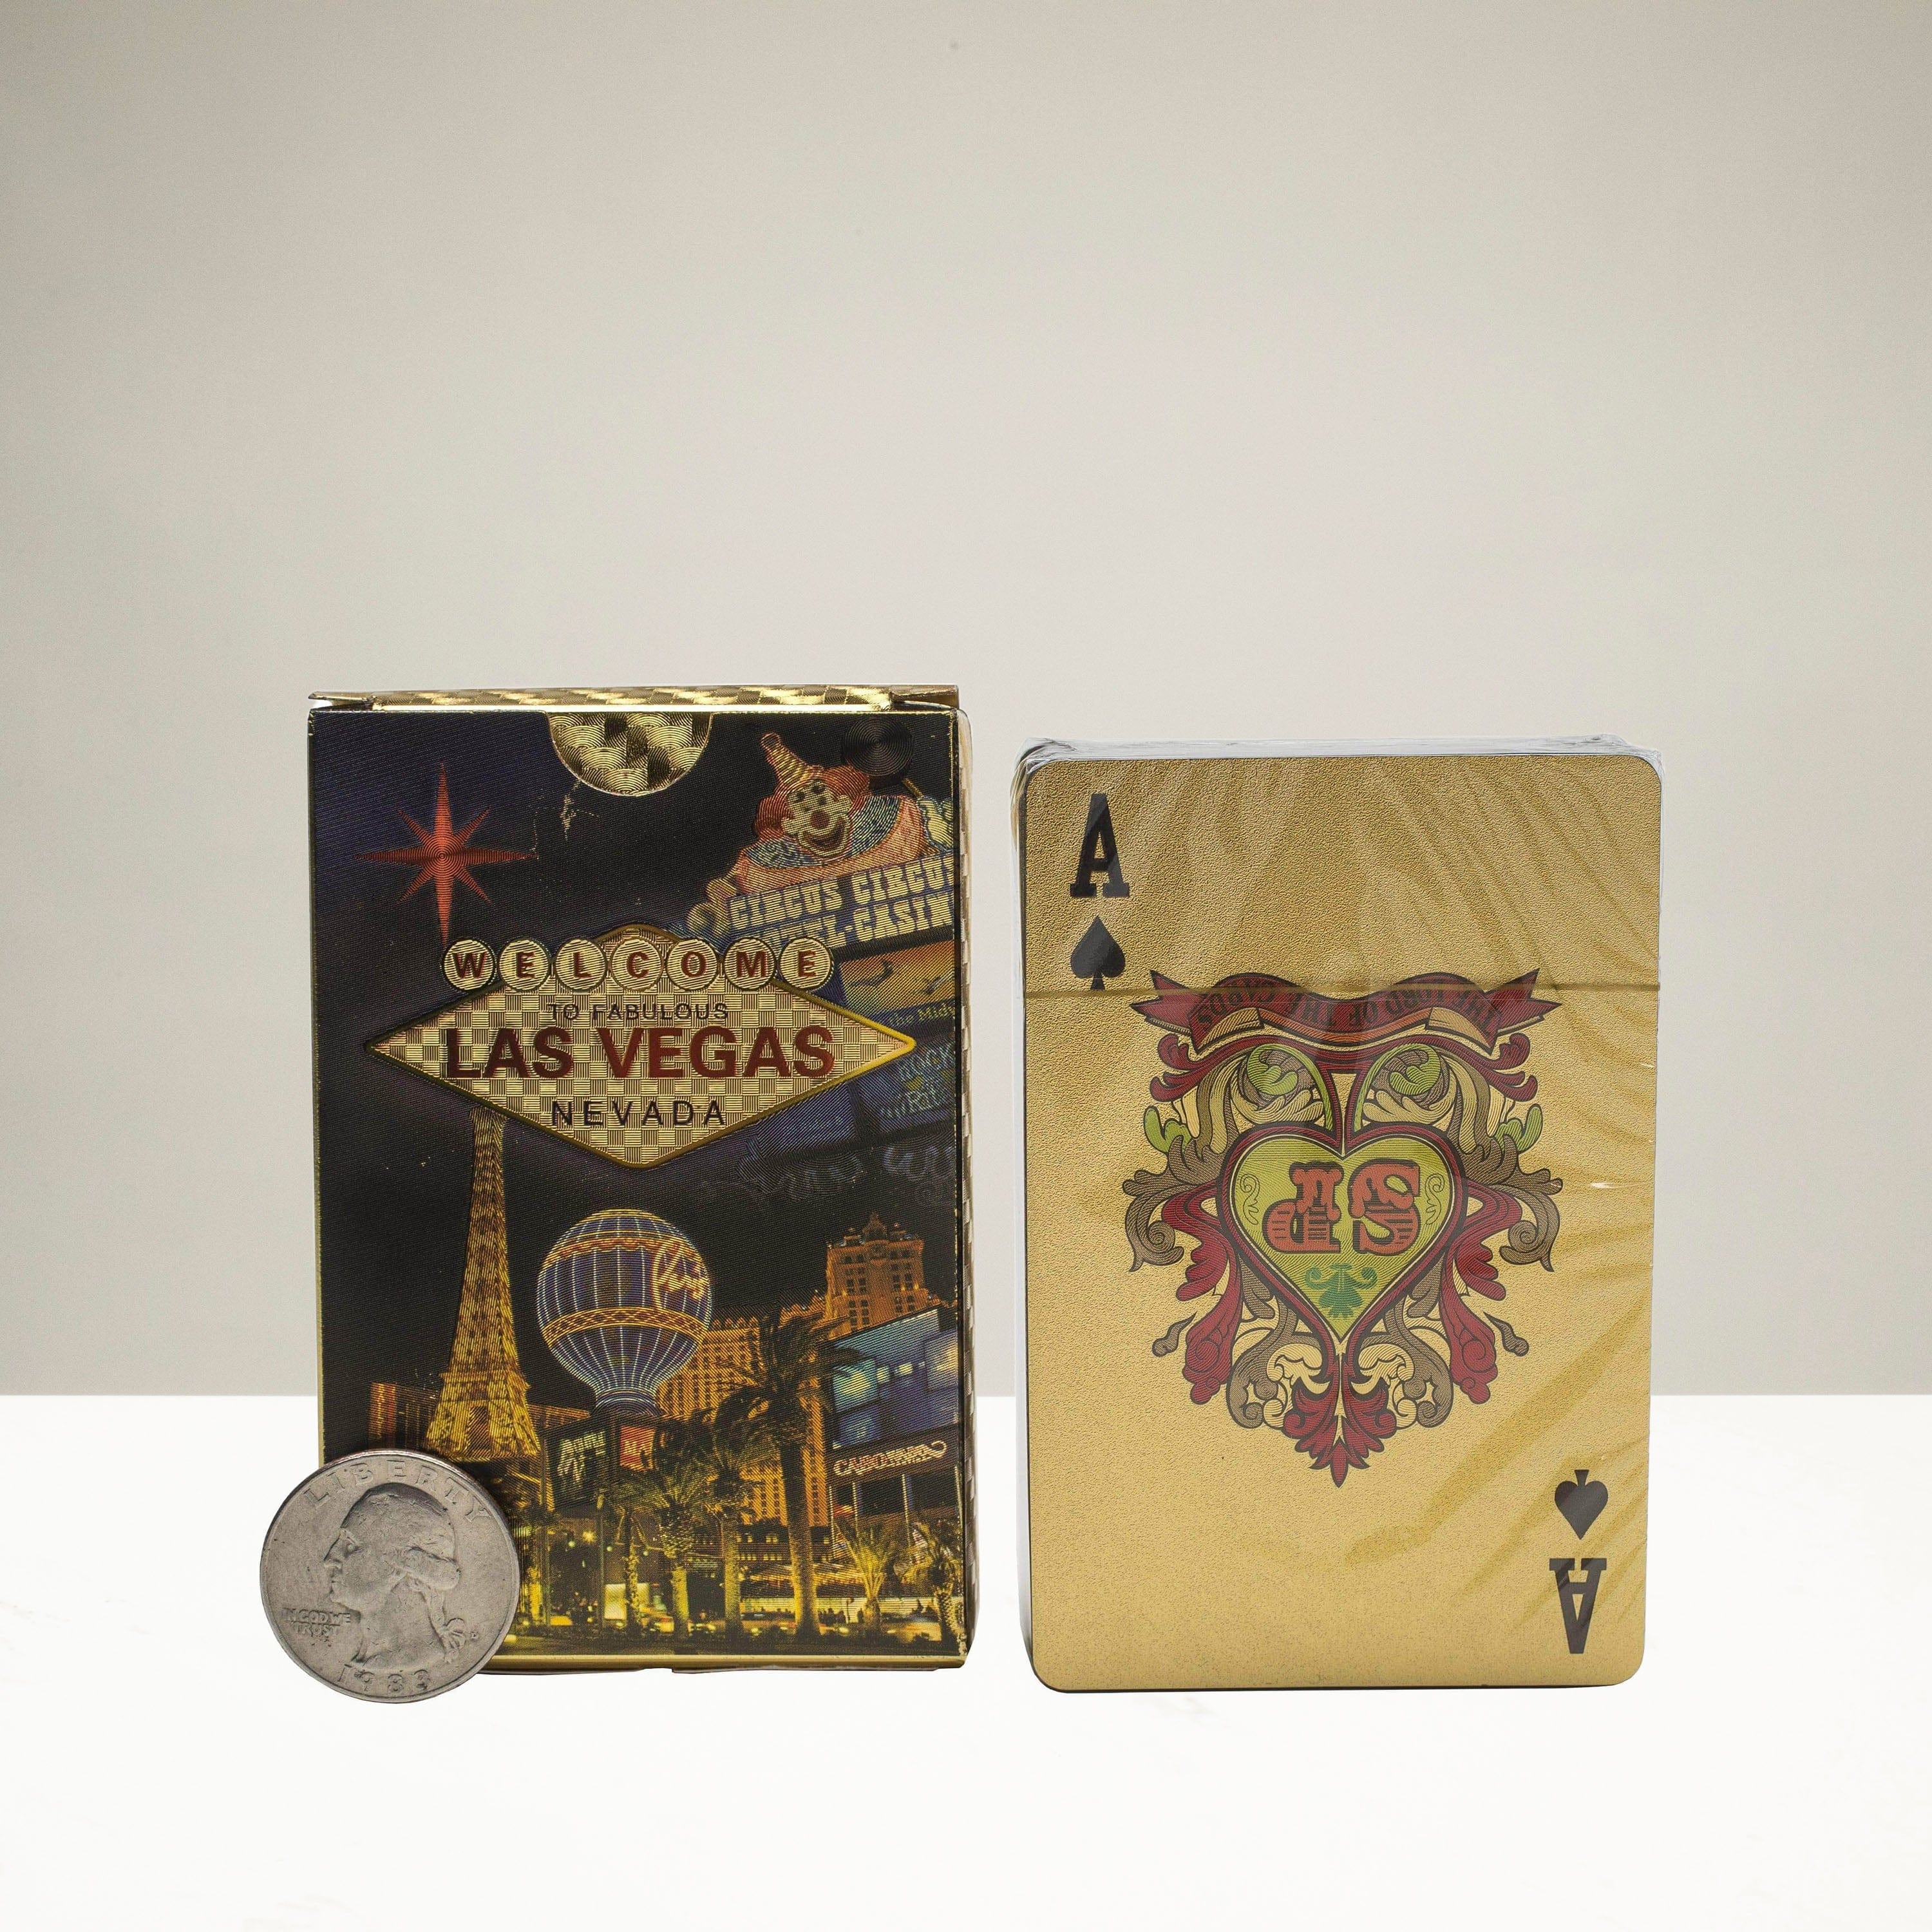 Vegas Golden Knights Deck Of Poker Playing Cards - Vegas Sports Shop